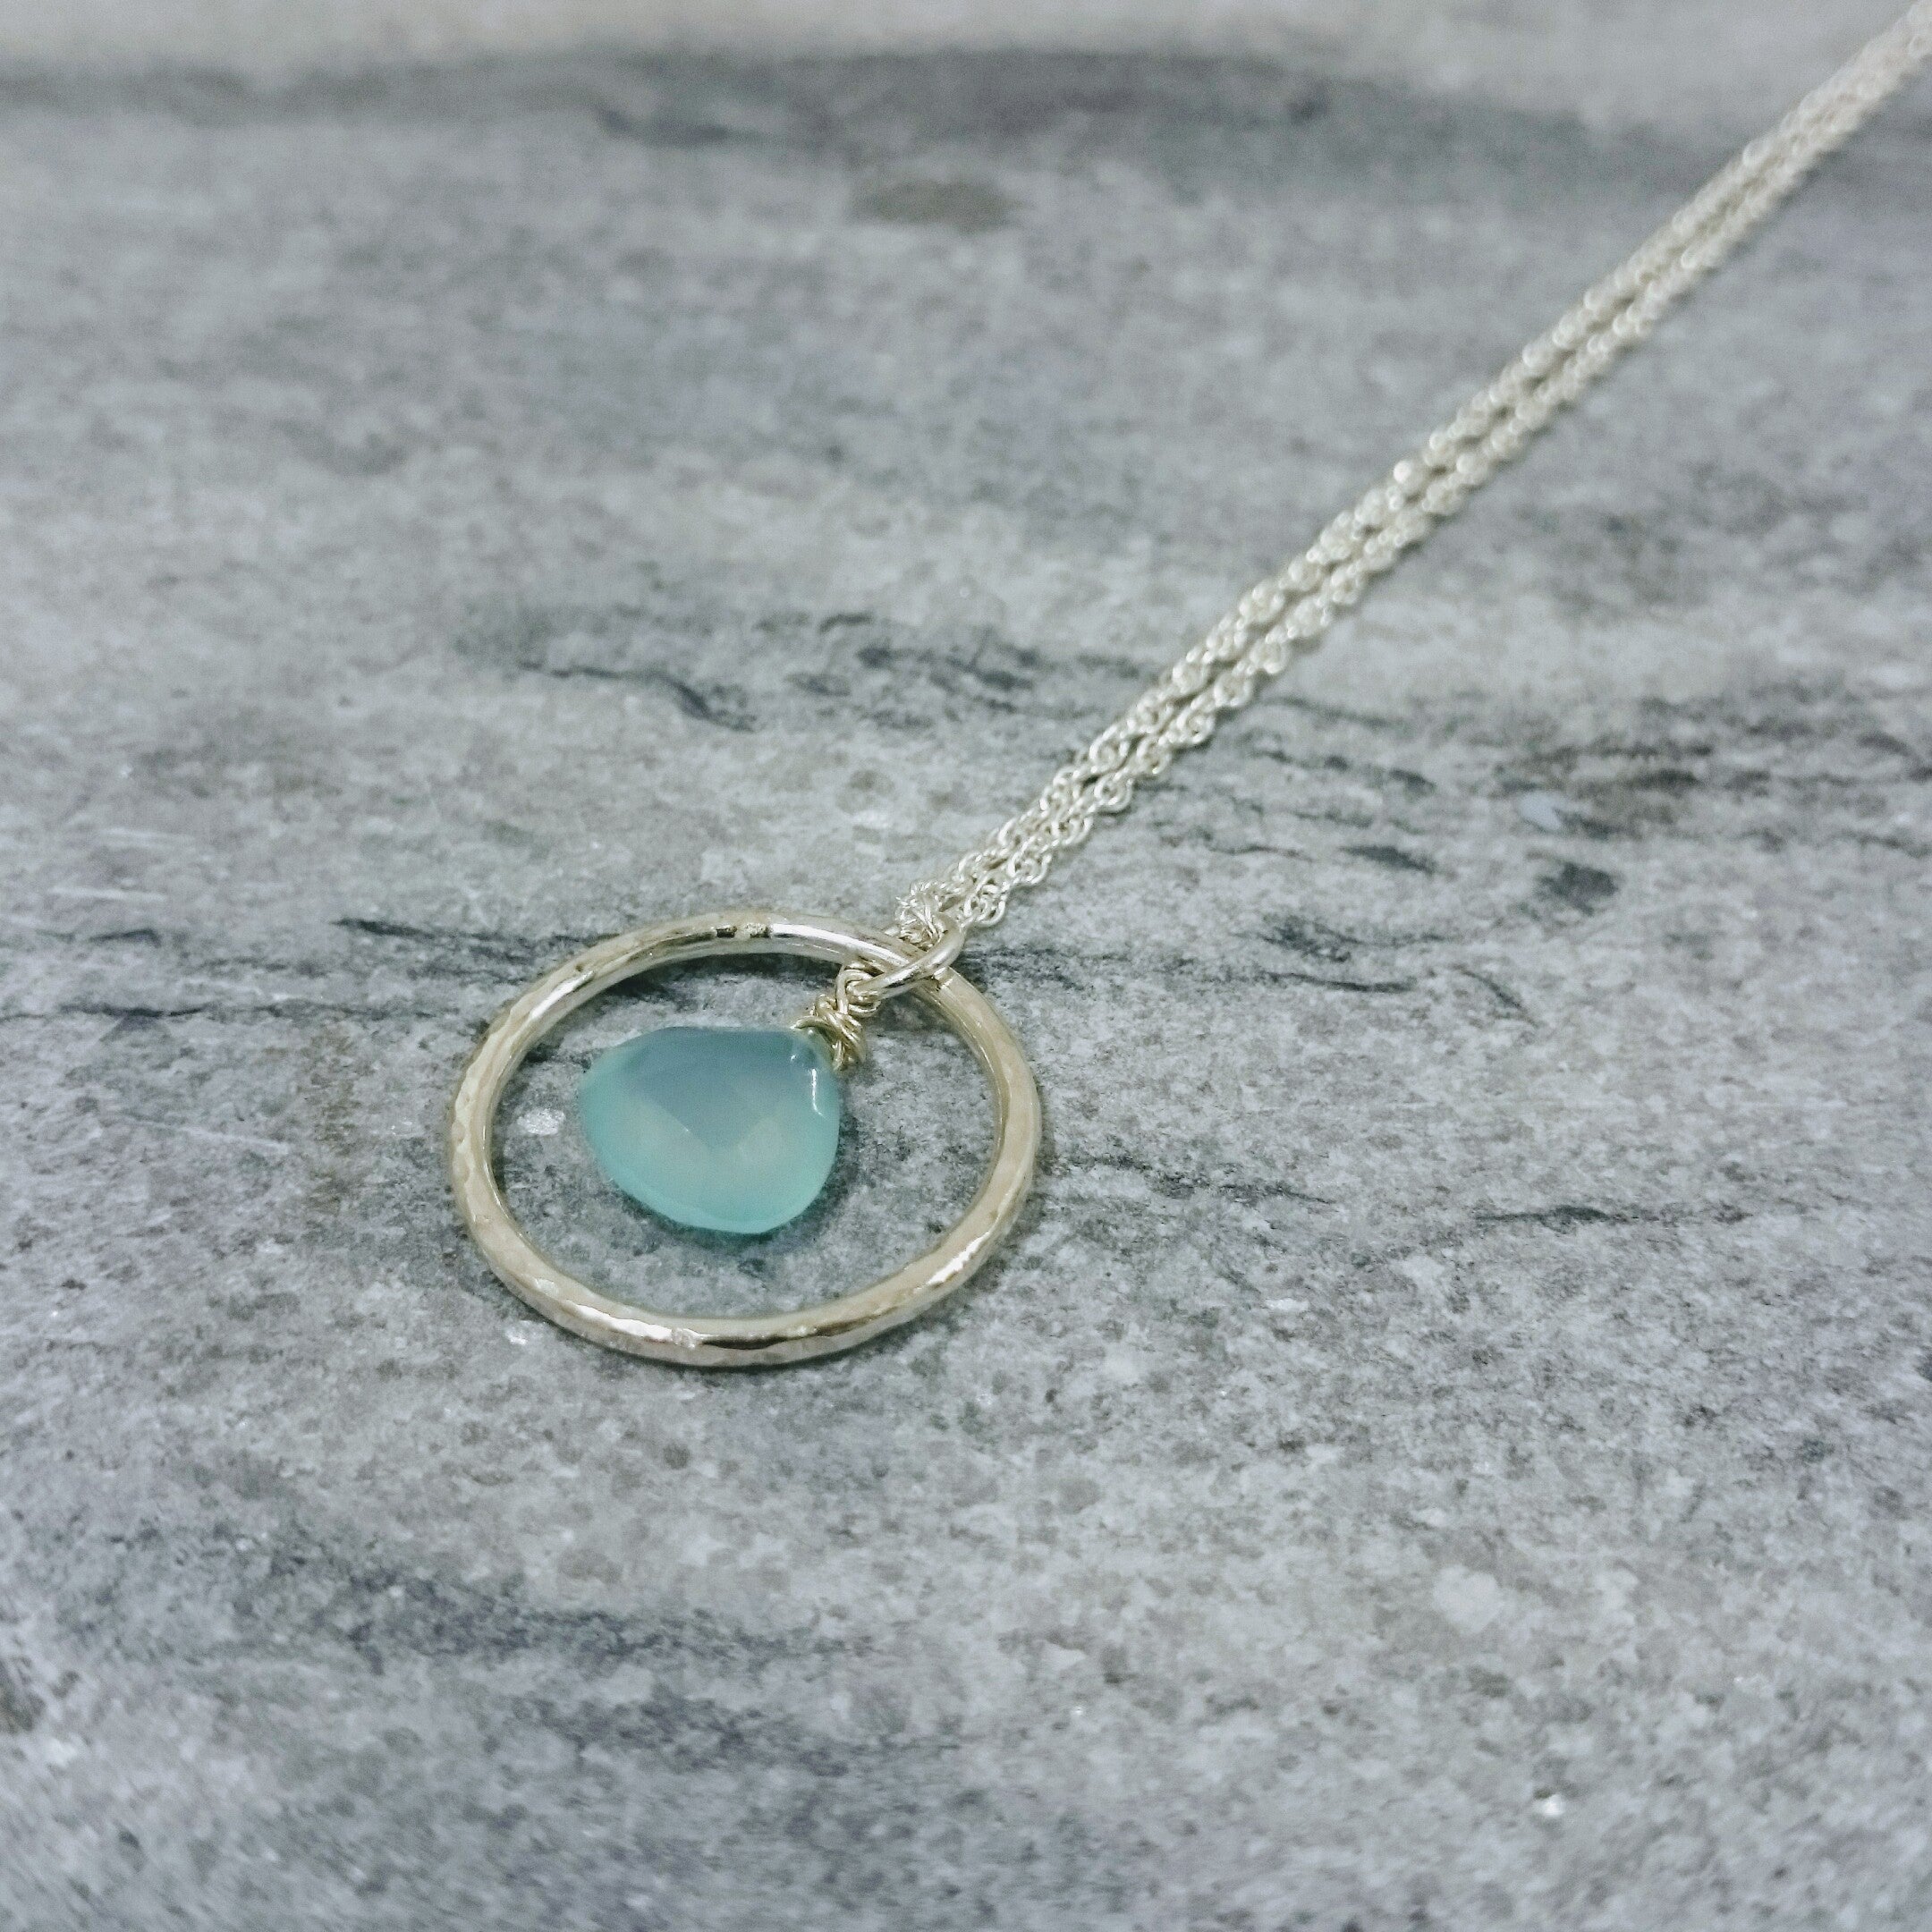 Aqua Stone Hoop Necklace - The Nancy Smillie Shop - Art, Jewellery & Designer Gifts Glasgow